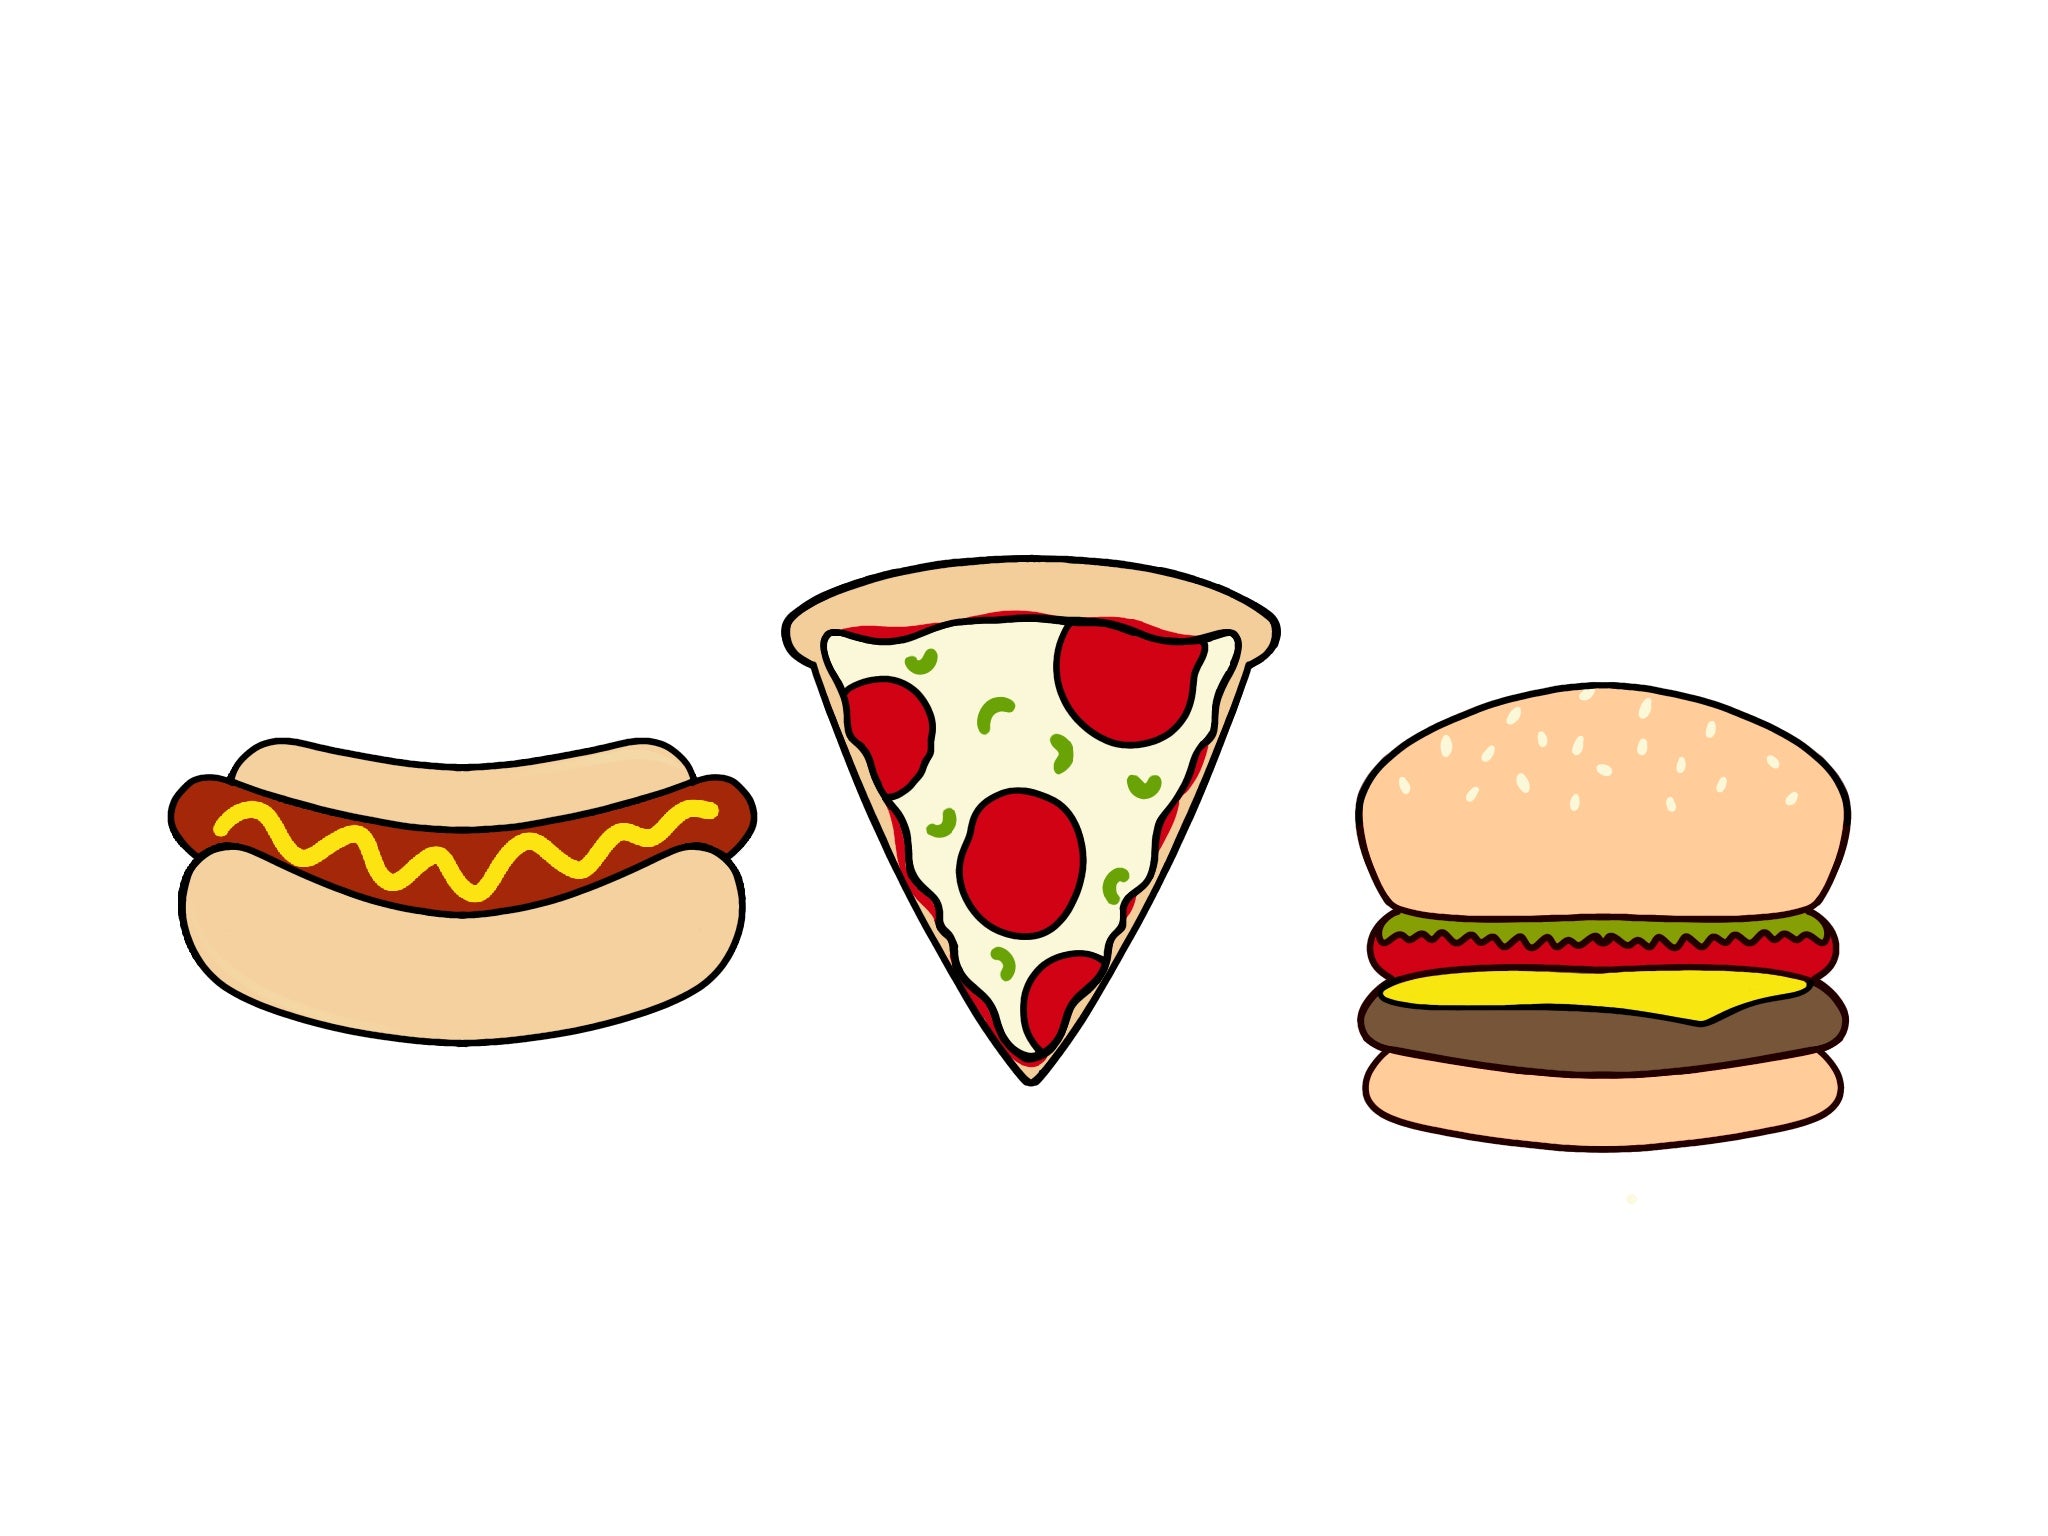 Pizza / Burger / Hot Dog Set